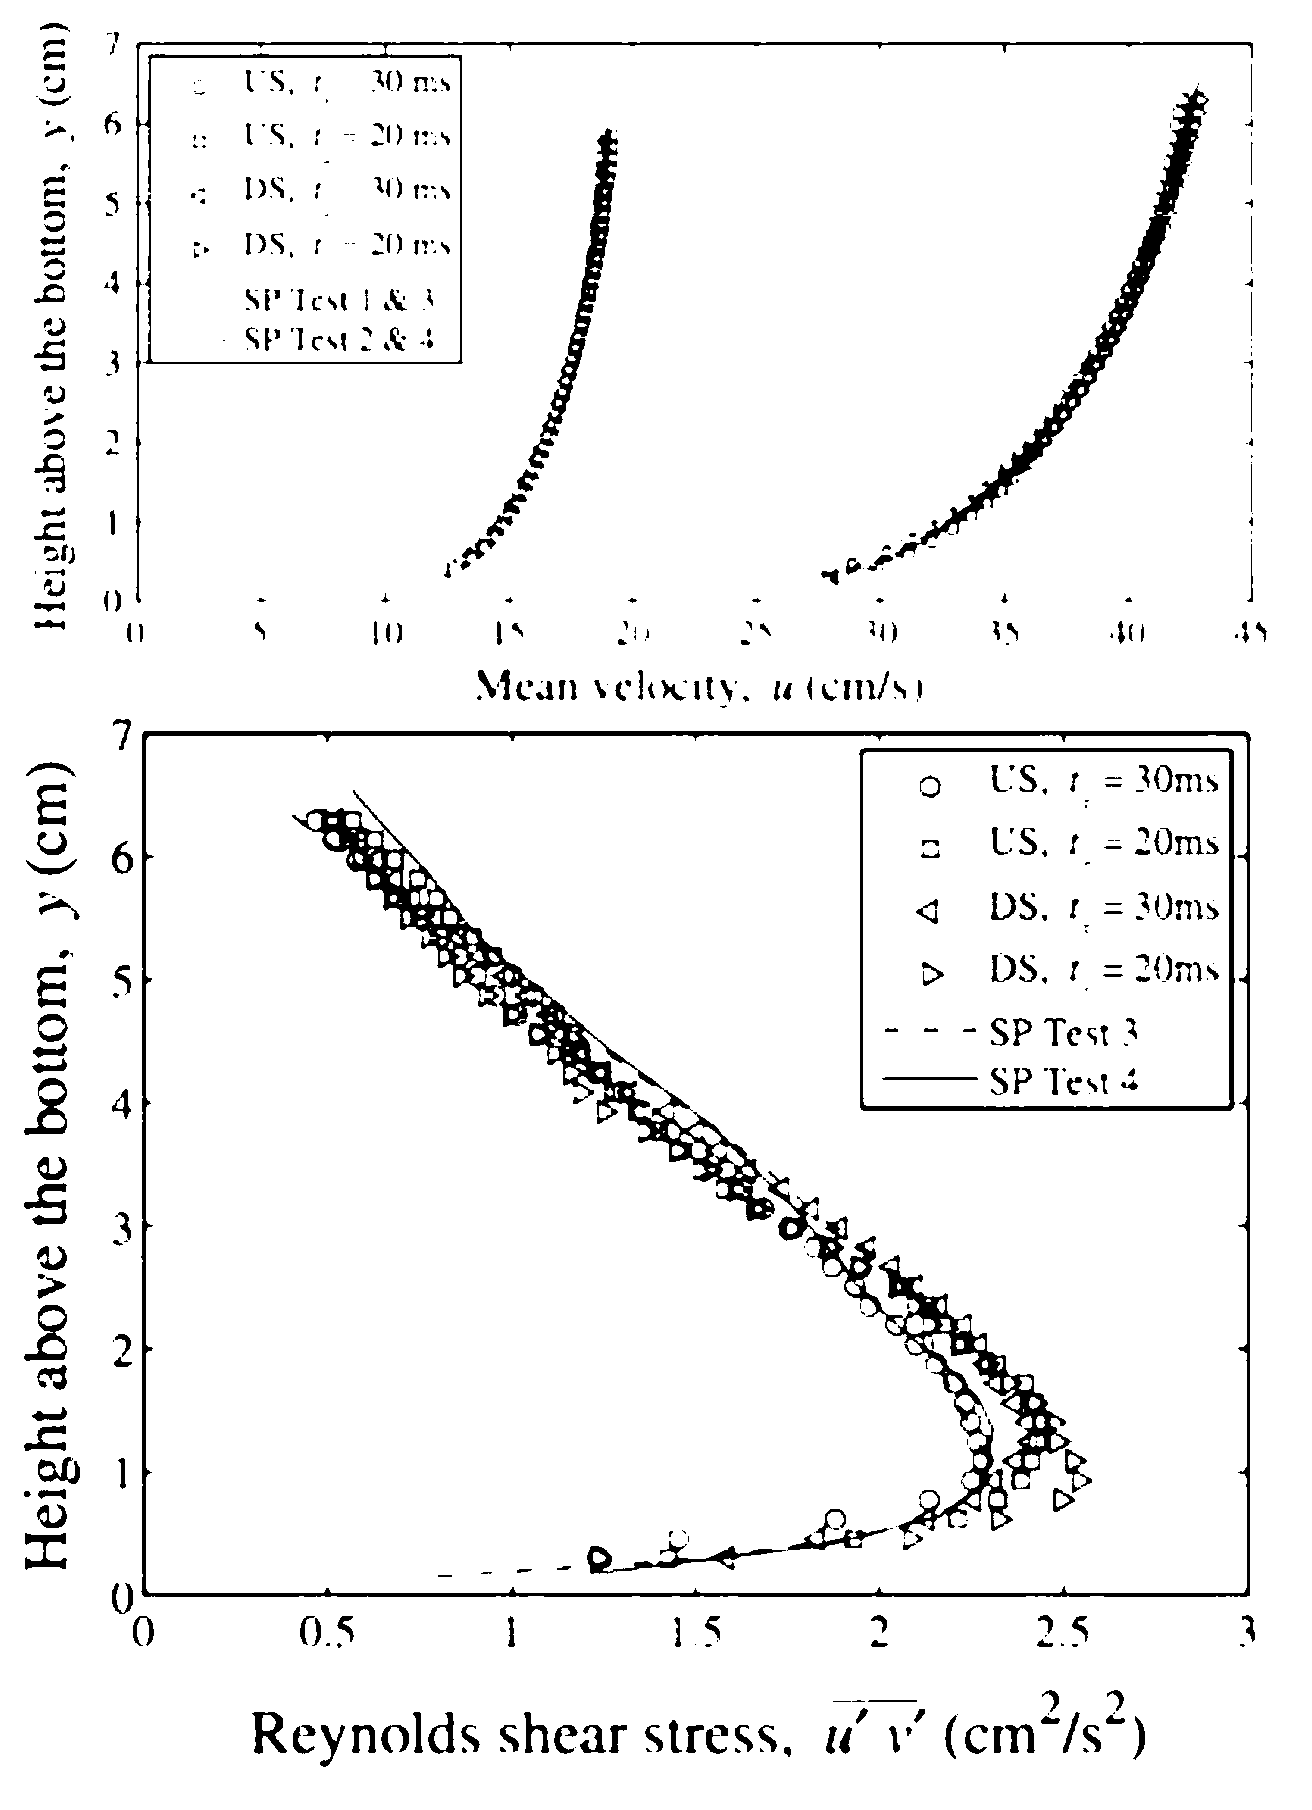 Low power consumption particle picture velocity measurement system based on bicolor laser scanning technique